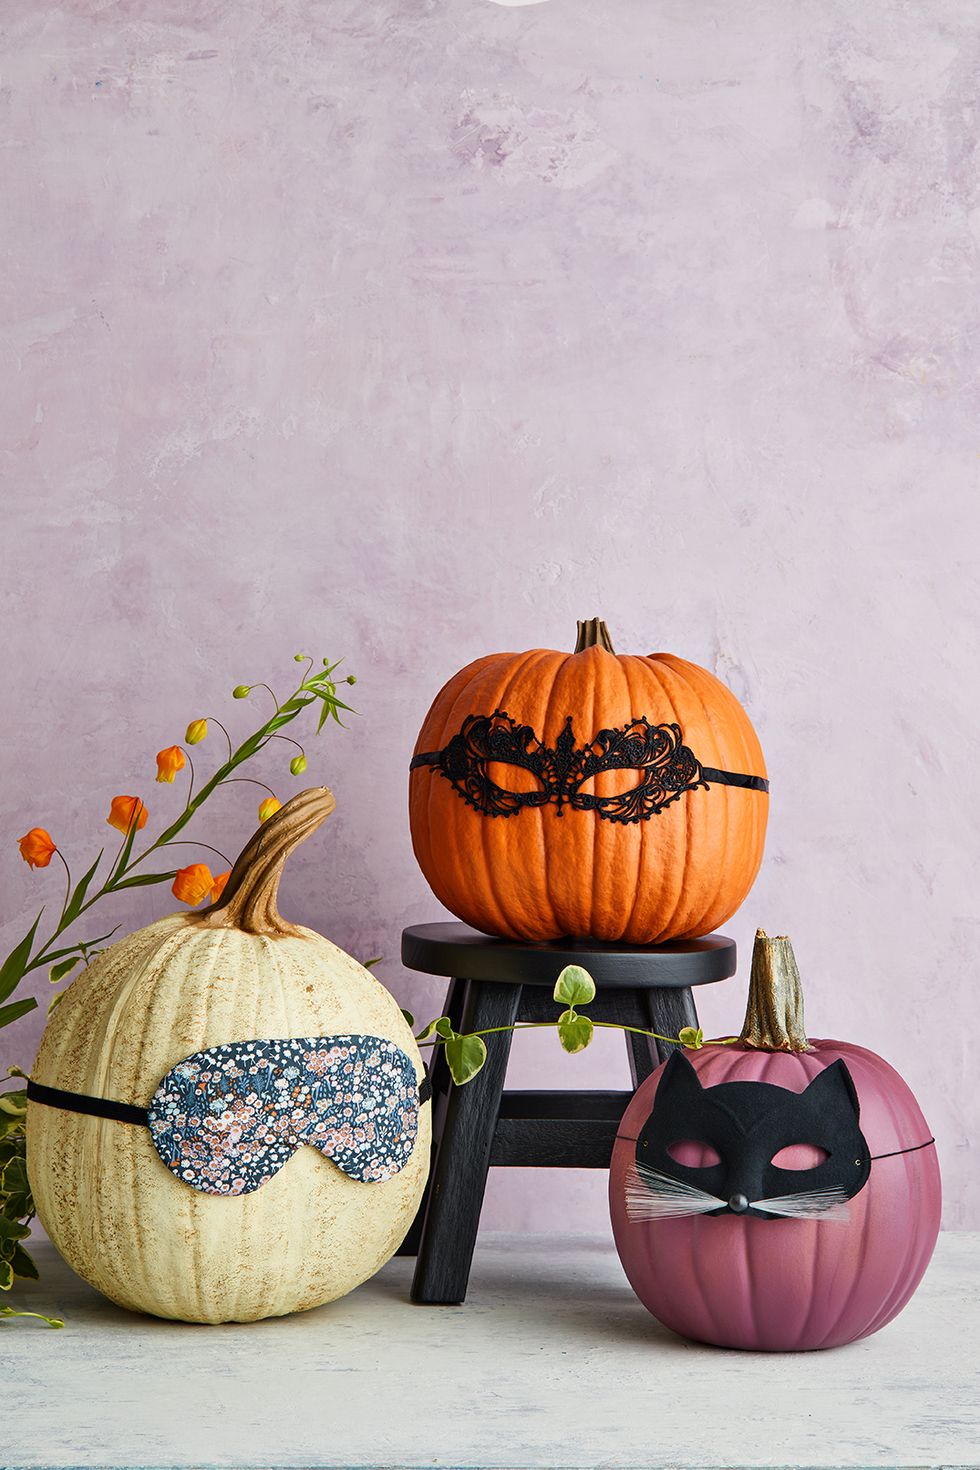 Jack-O-Lantern, Scary Hallowen Pumpkin - Halloween Gift  Art Board Print  for Sale by GaMer-FoR-eVeR